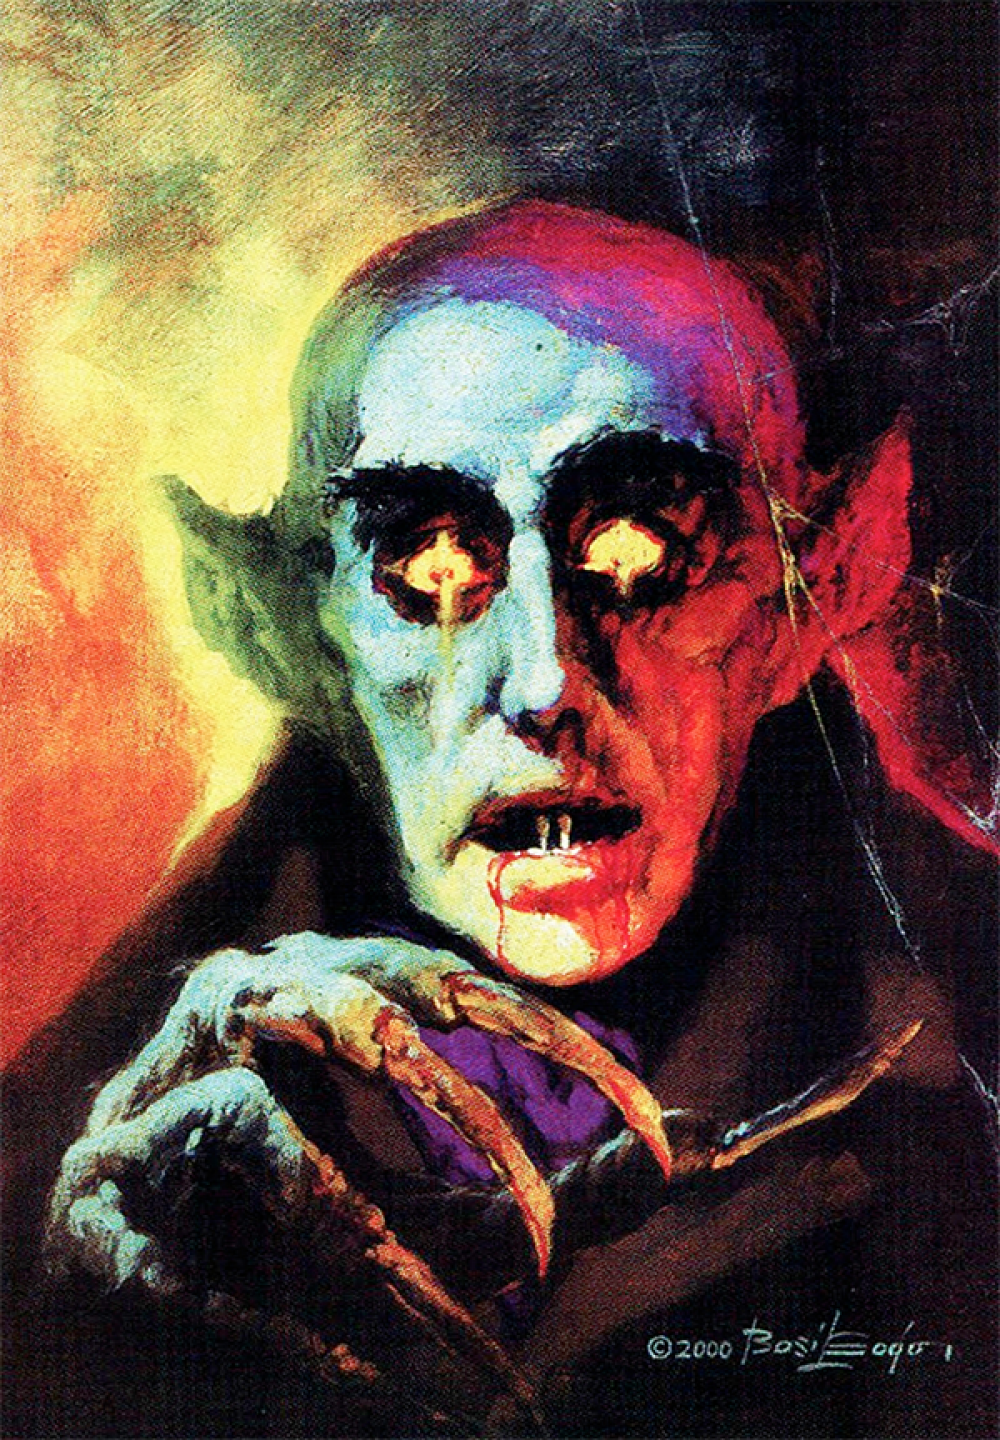 Nosferatu (1922) Count Orlok portrait by Famous Monsters of Filmland magazine illustrator Basil Gogos, 2000